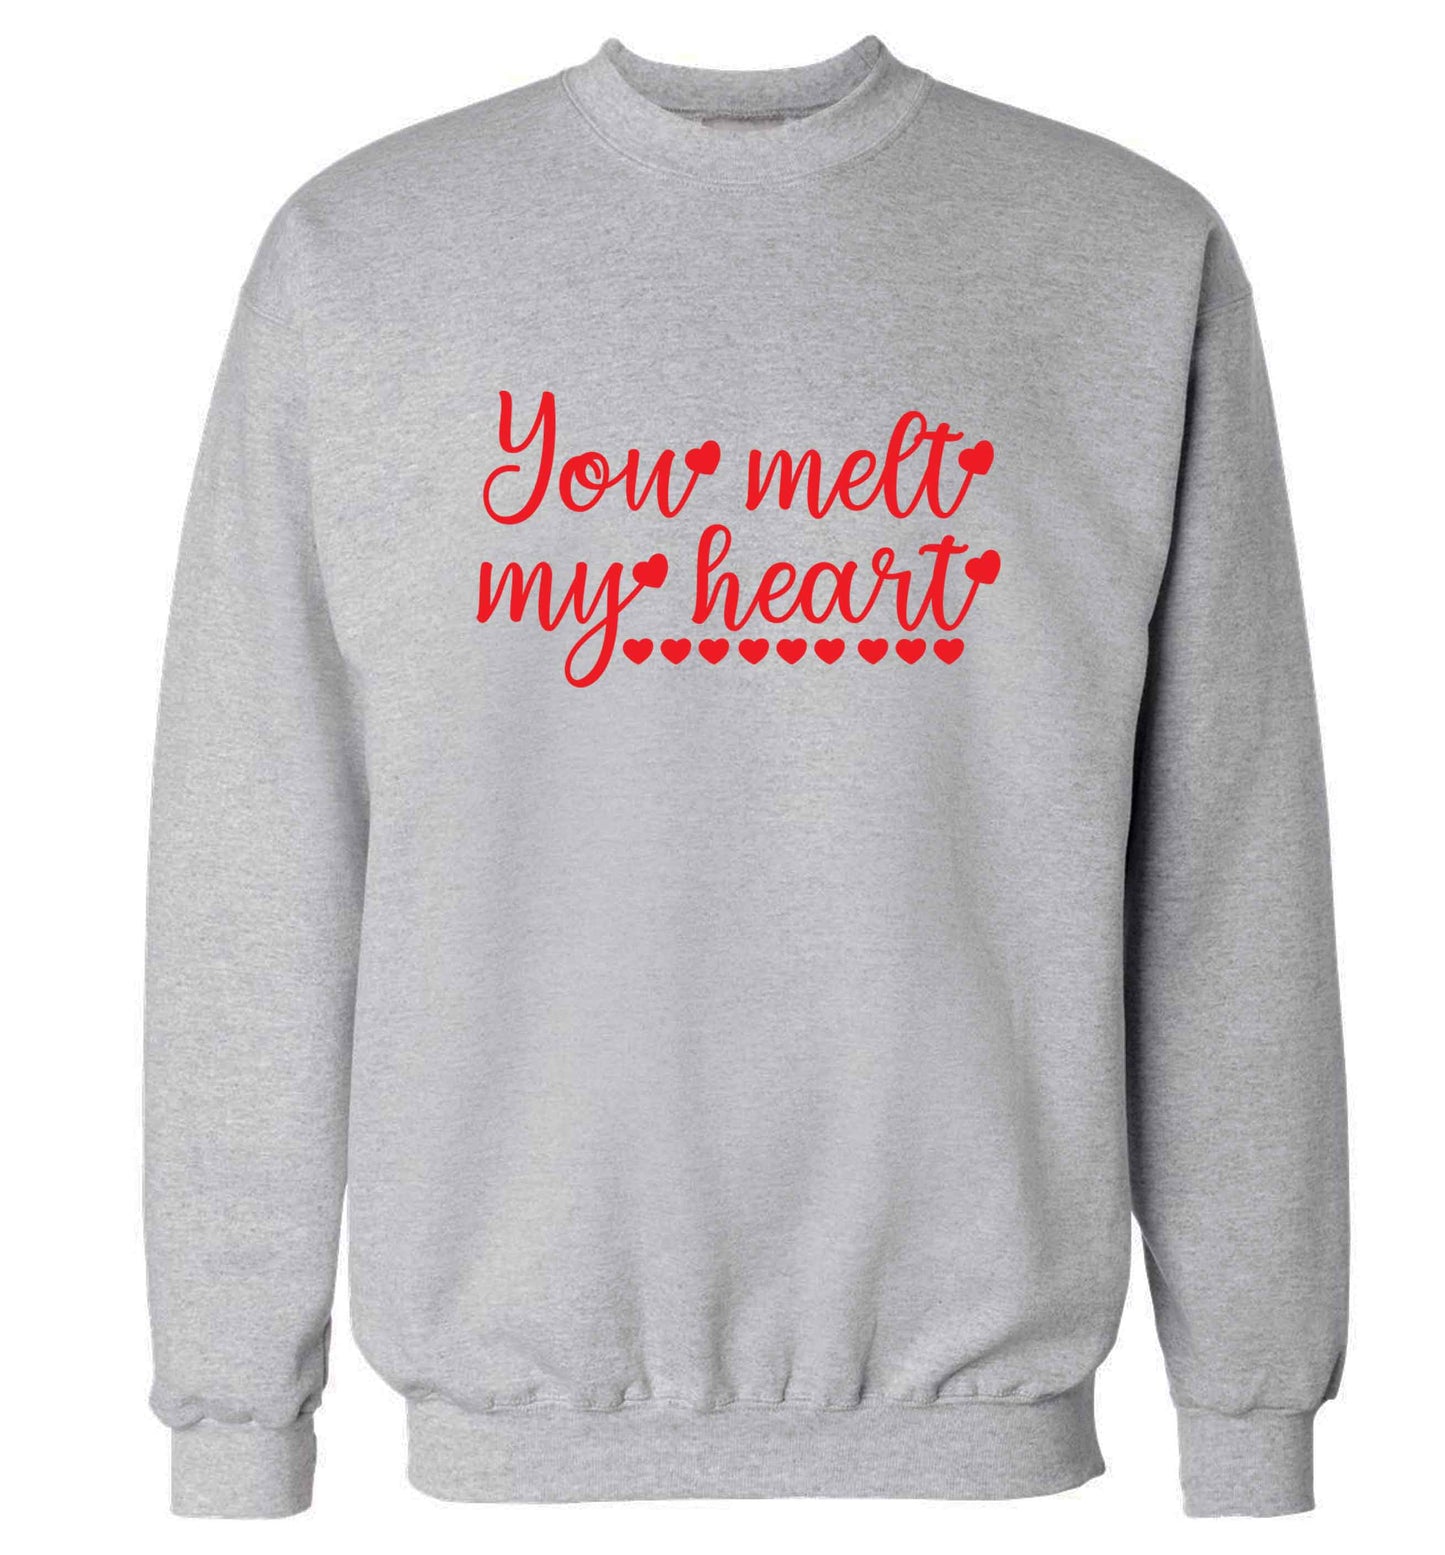 You melt my heart adult's unisex grey sweater 2XL